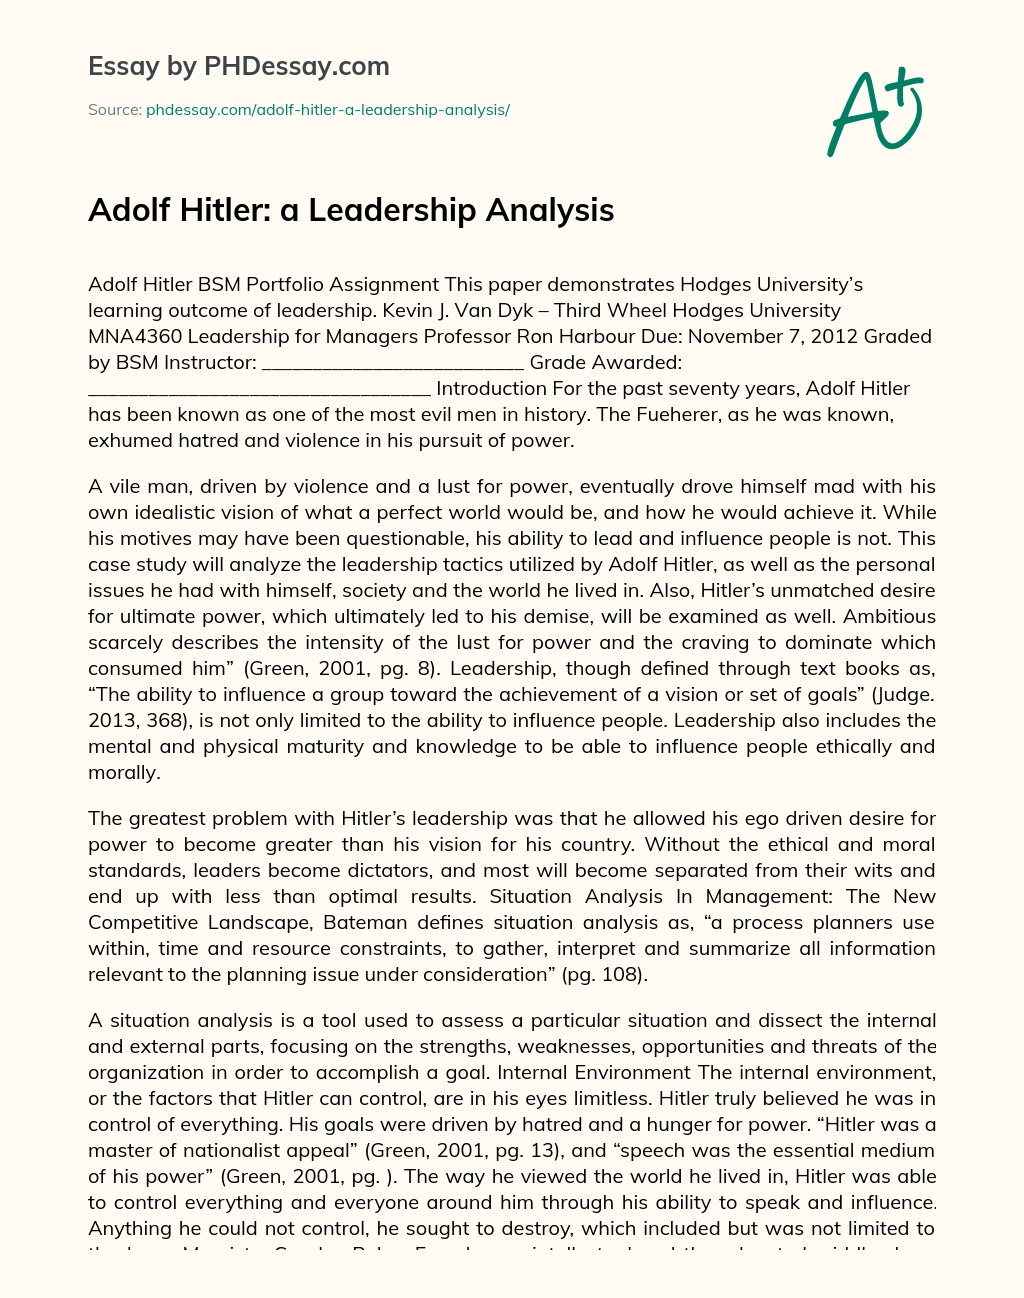 Adolf Hitler: a Leadership Analysis essay